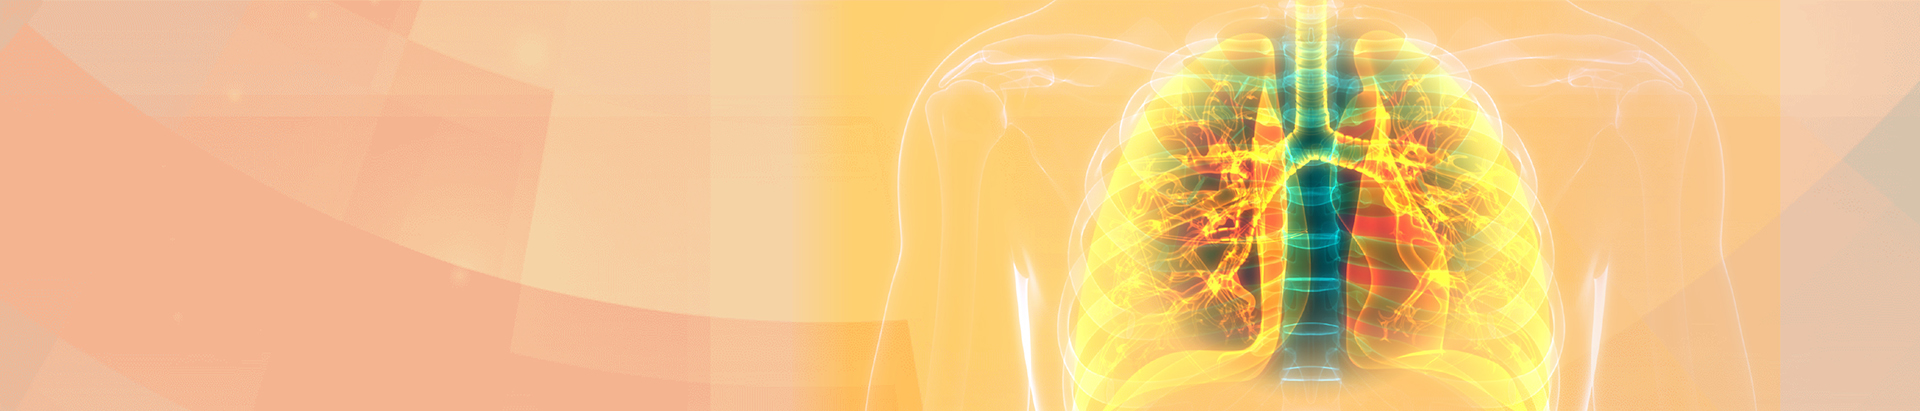 Pulmonary Embolism - Disease Overview